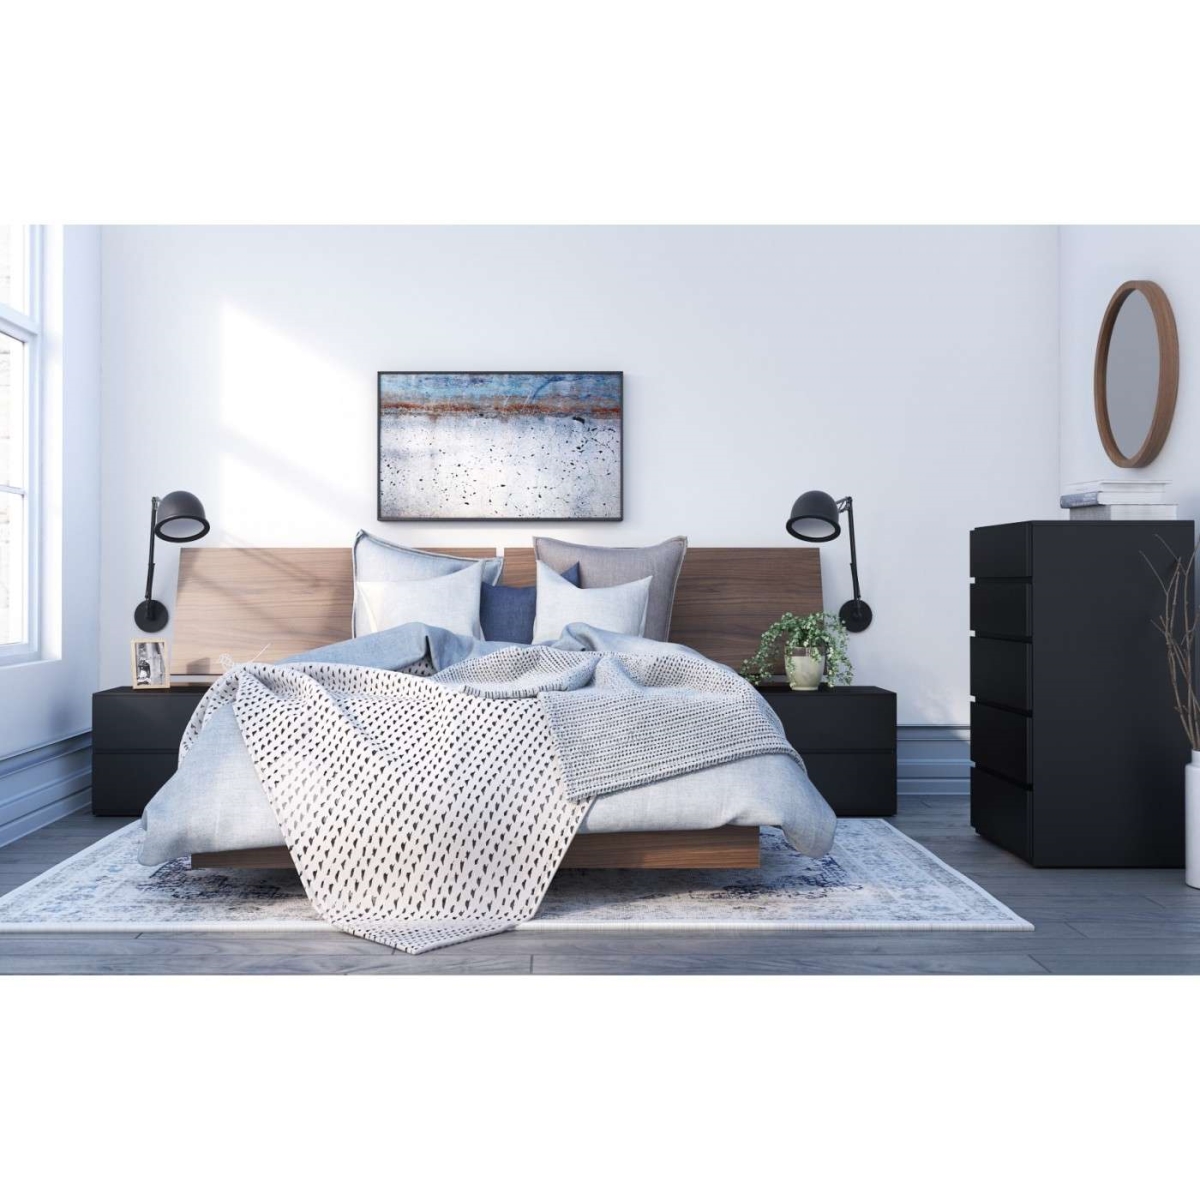 400875 Sonoma Bedroom Set, Walnut & Black - Full Size